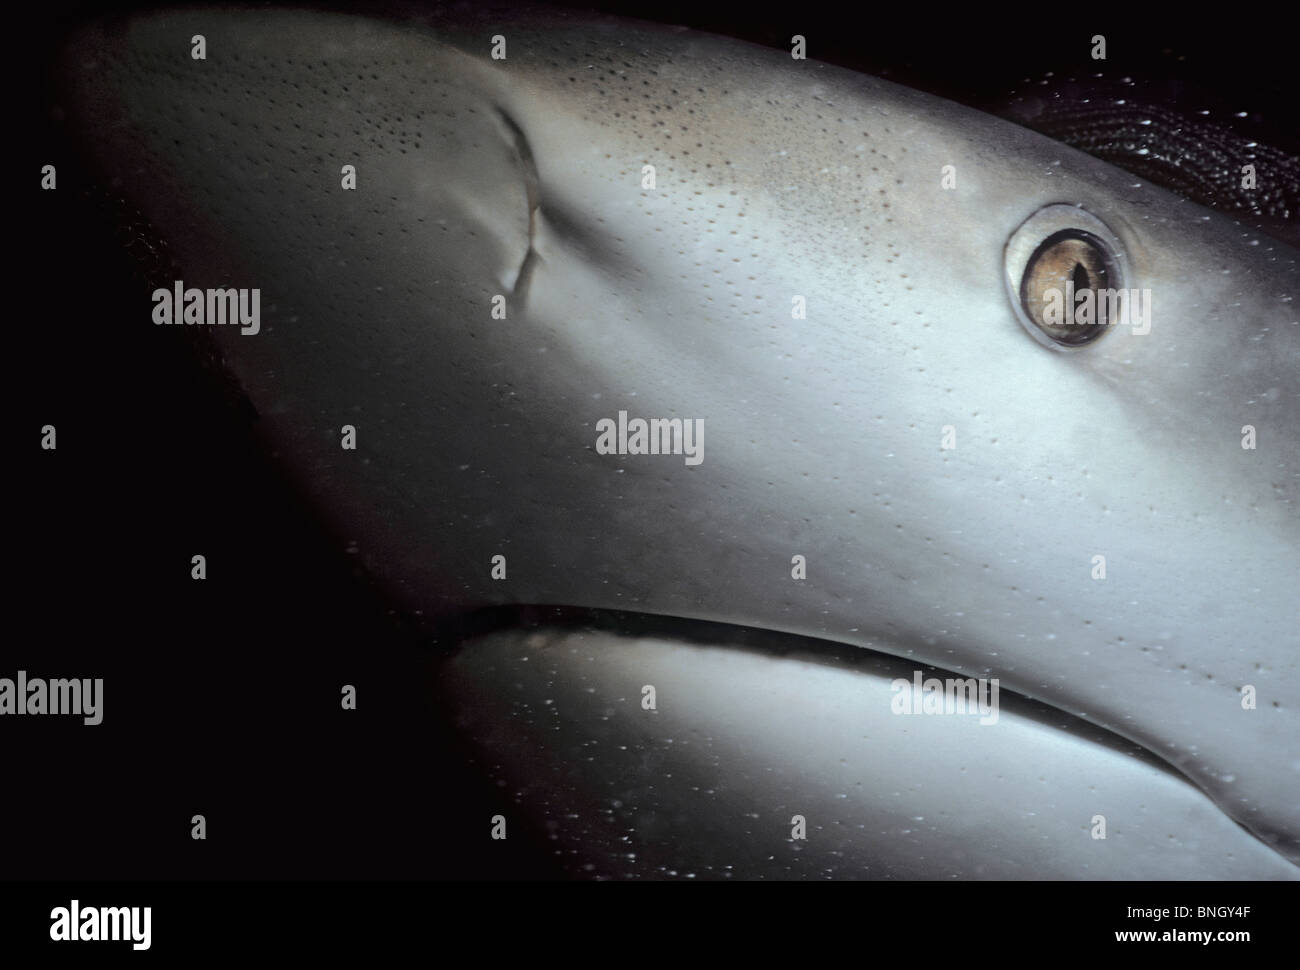 Karibischen Riffhai (Carcharhinus Perezi), Freeport, Bahamas - Karibik. Stockfoto